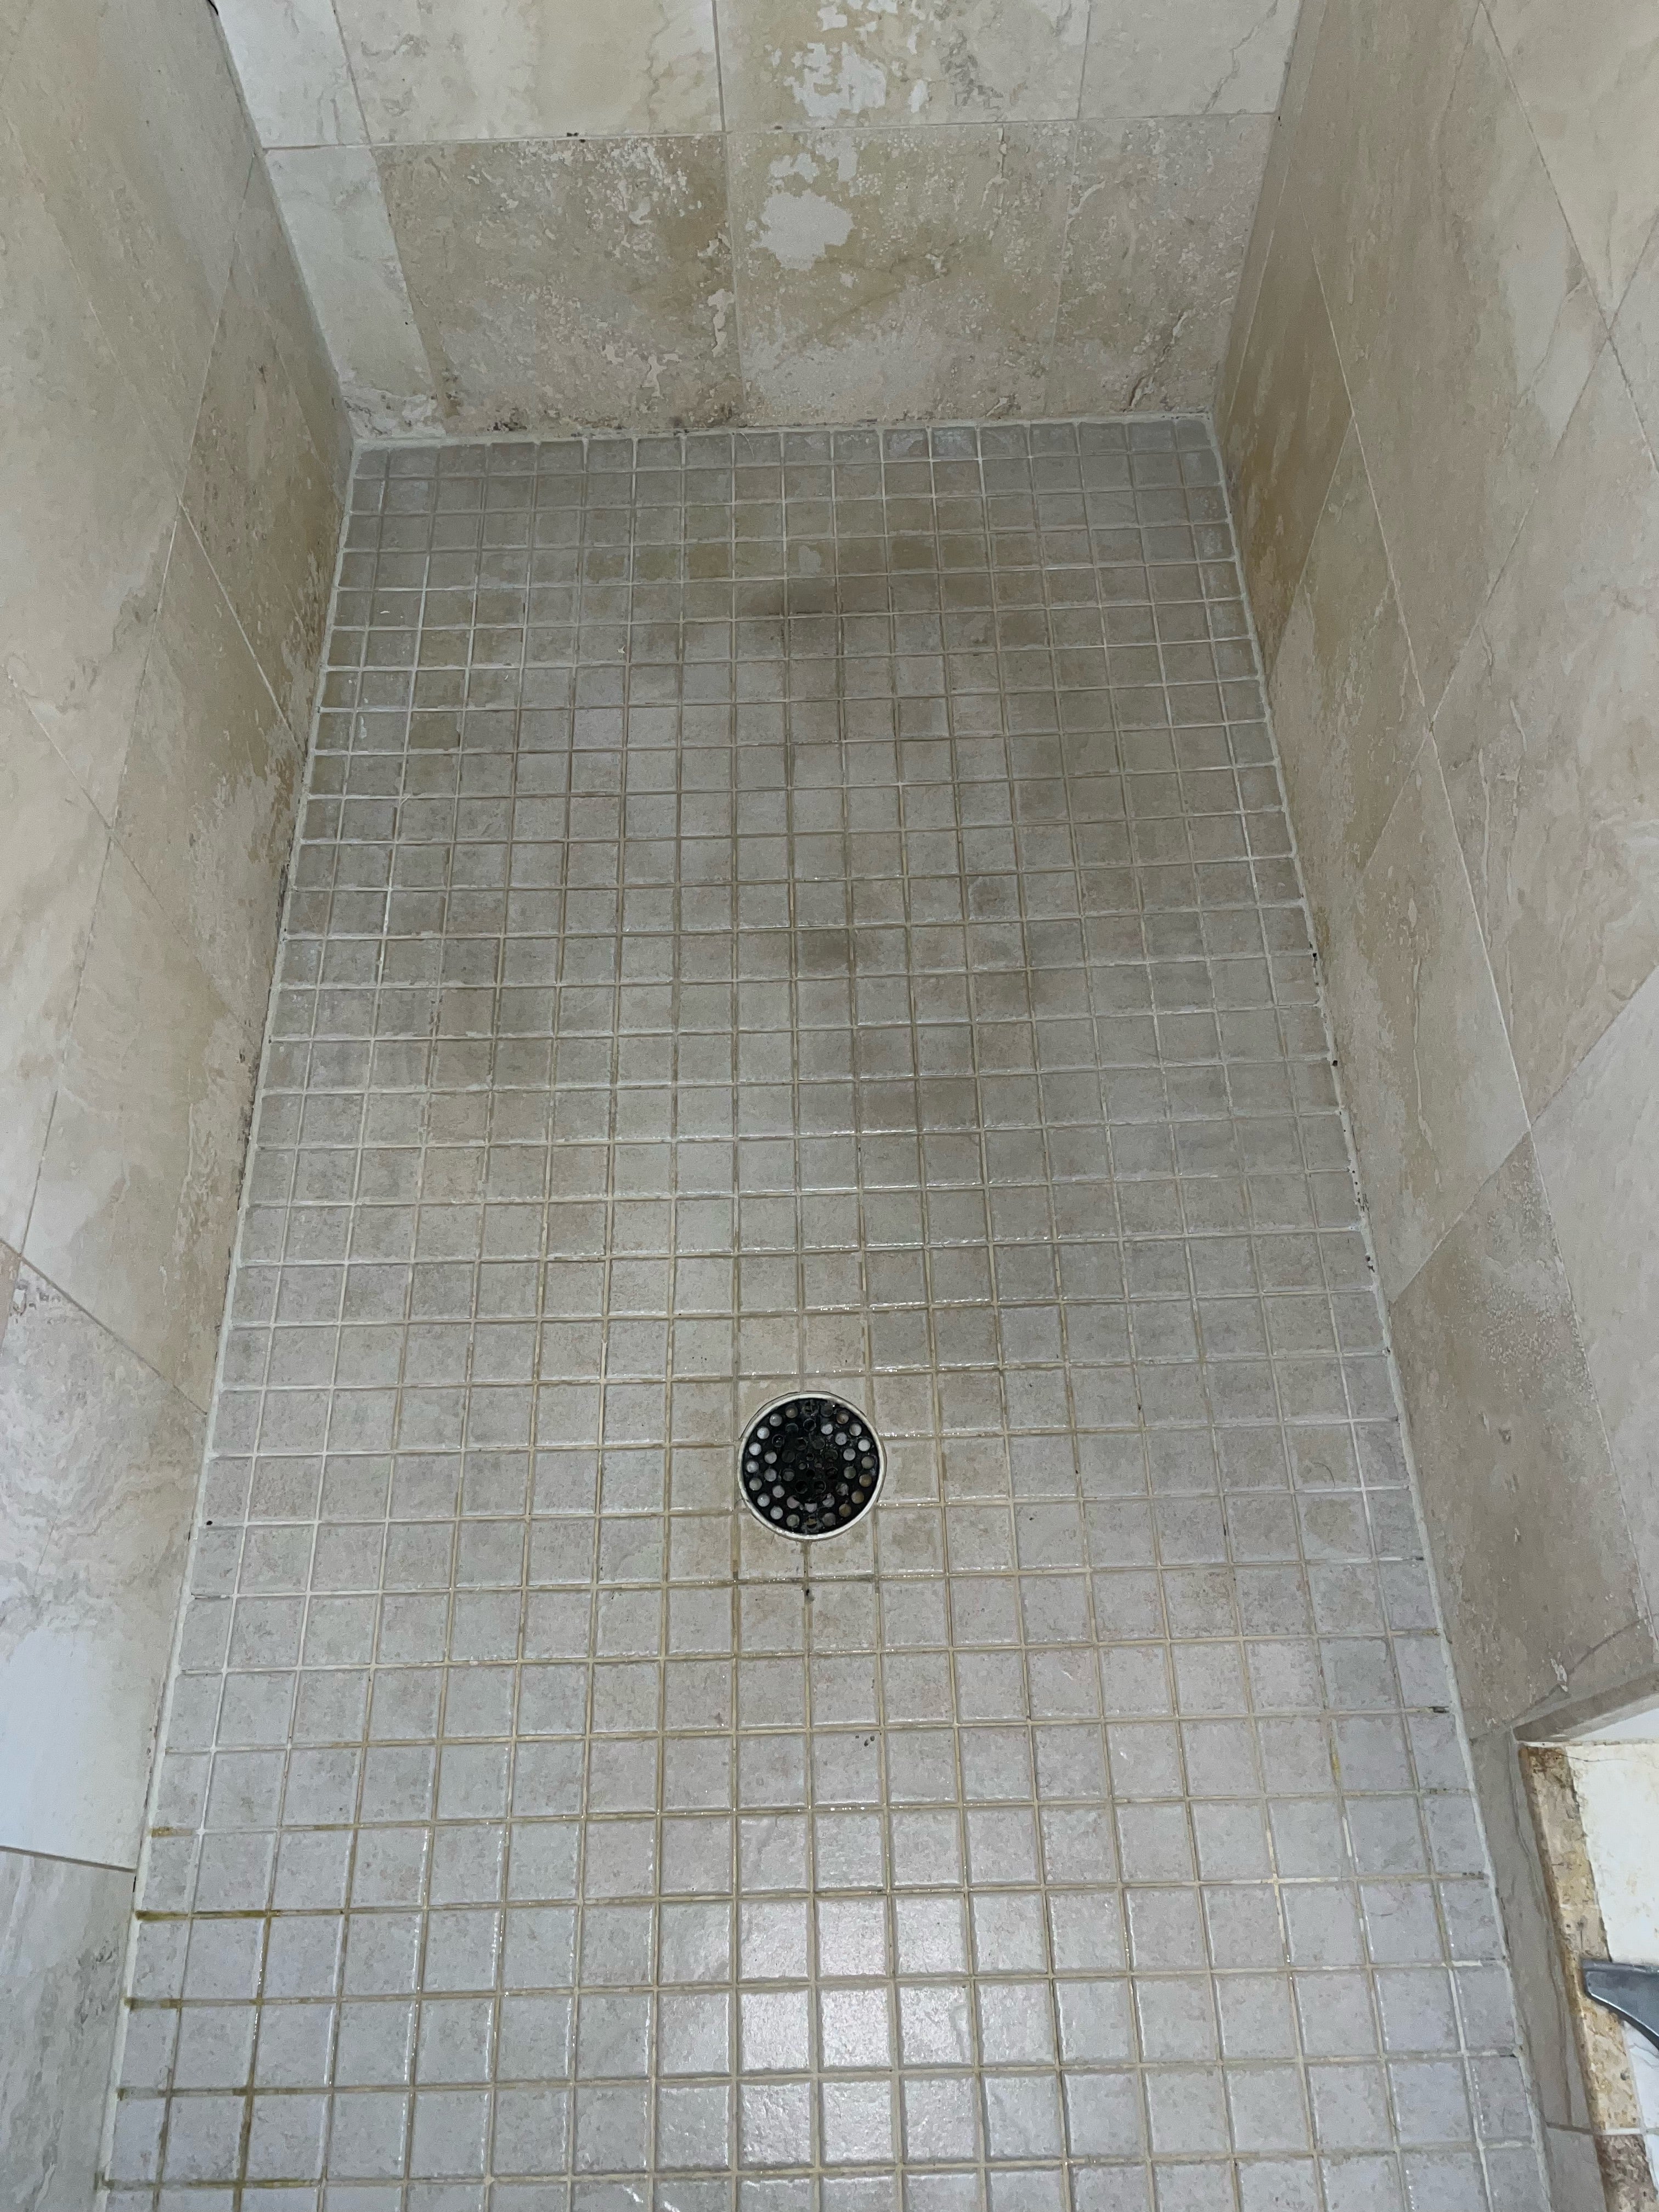 caluking shower floor